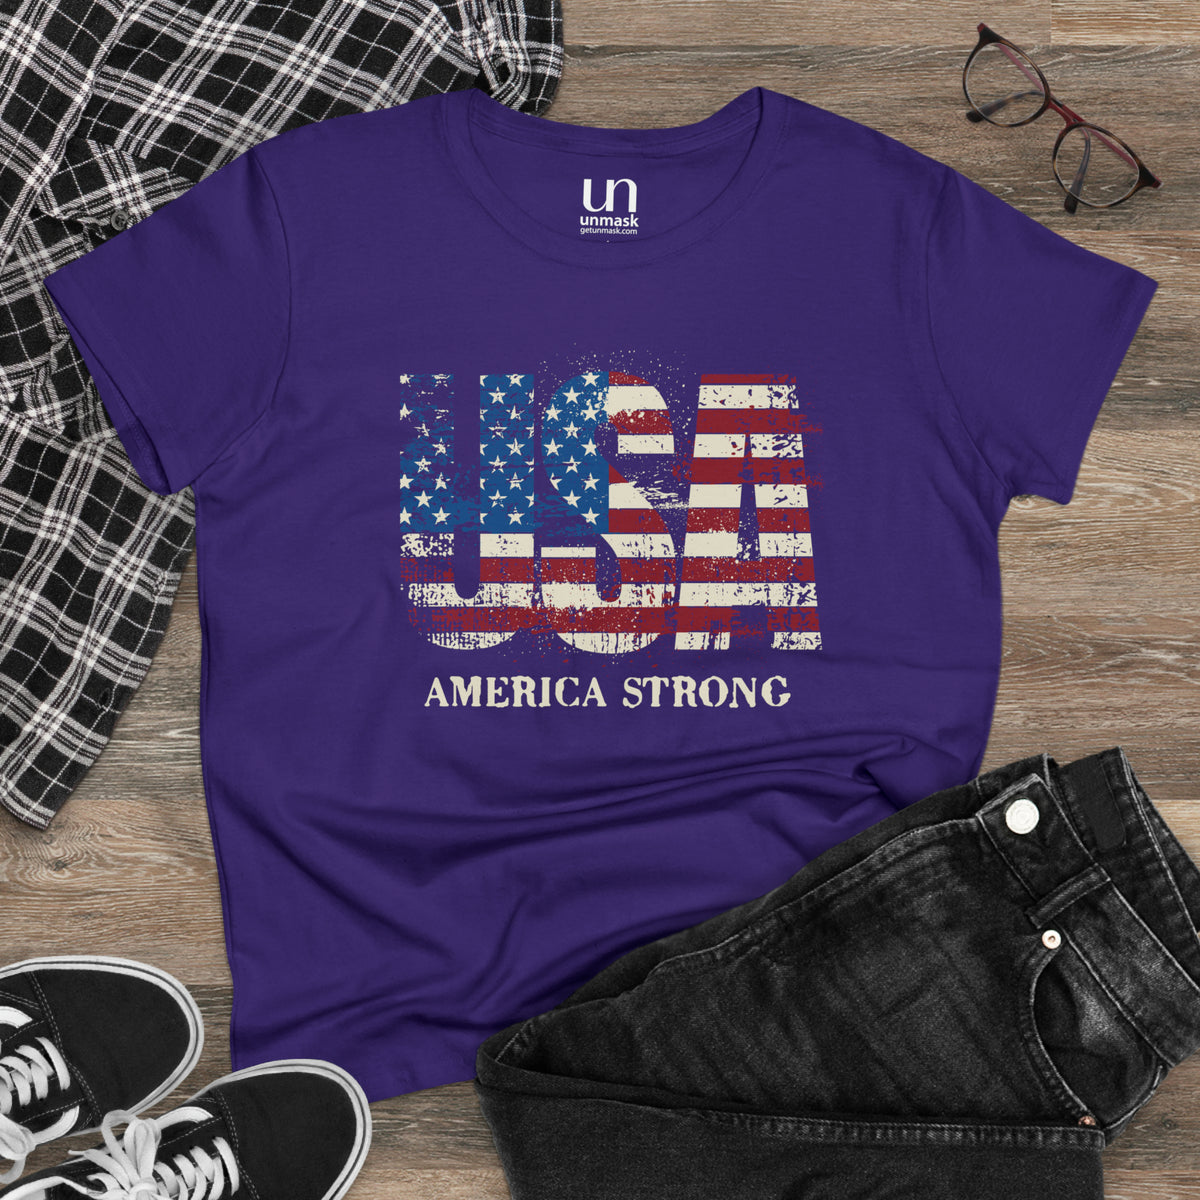 America Strong Women's Tee